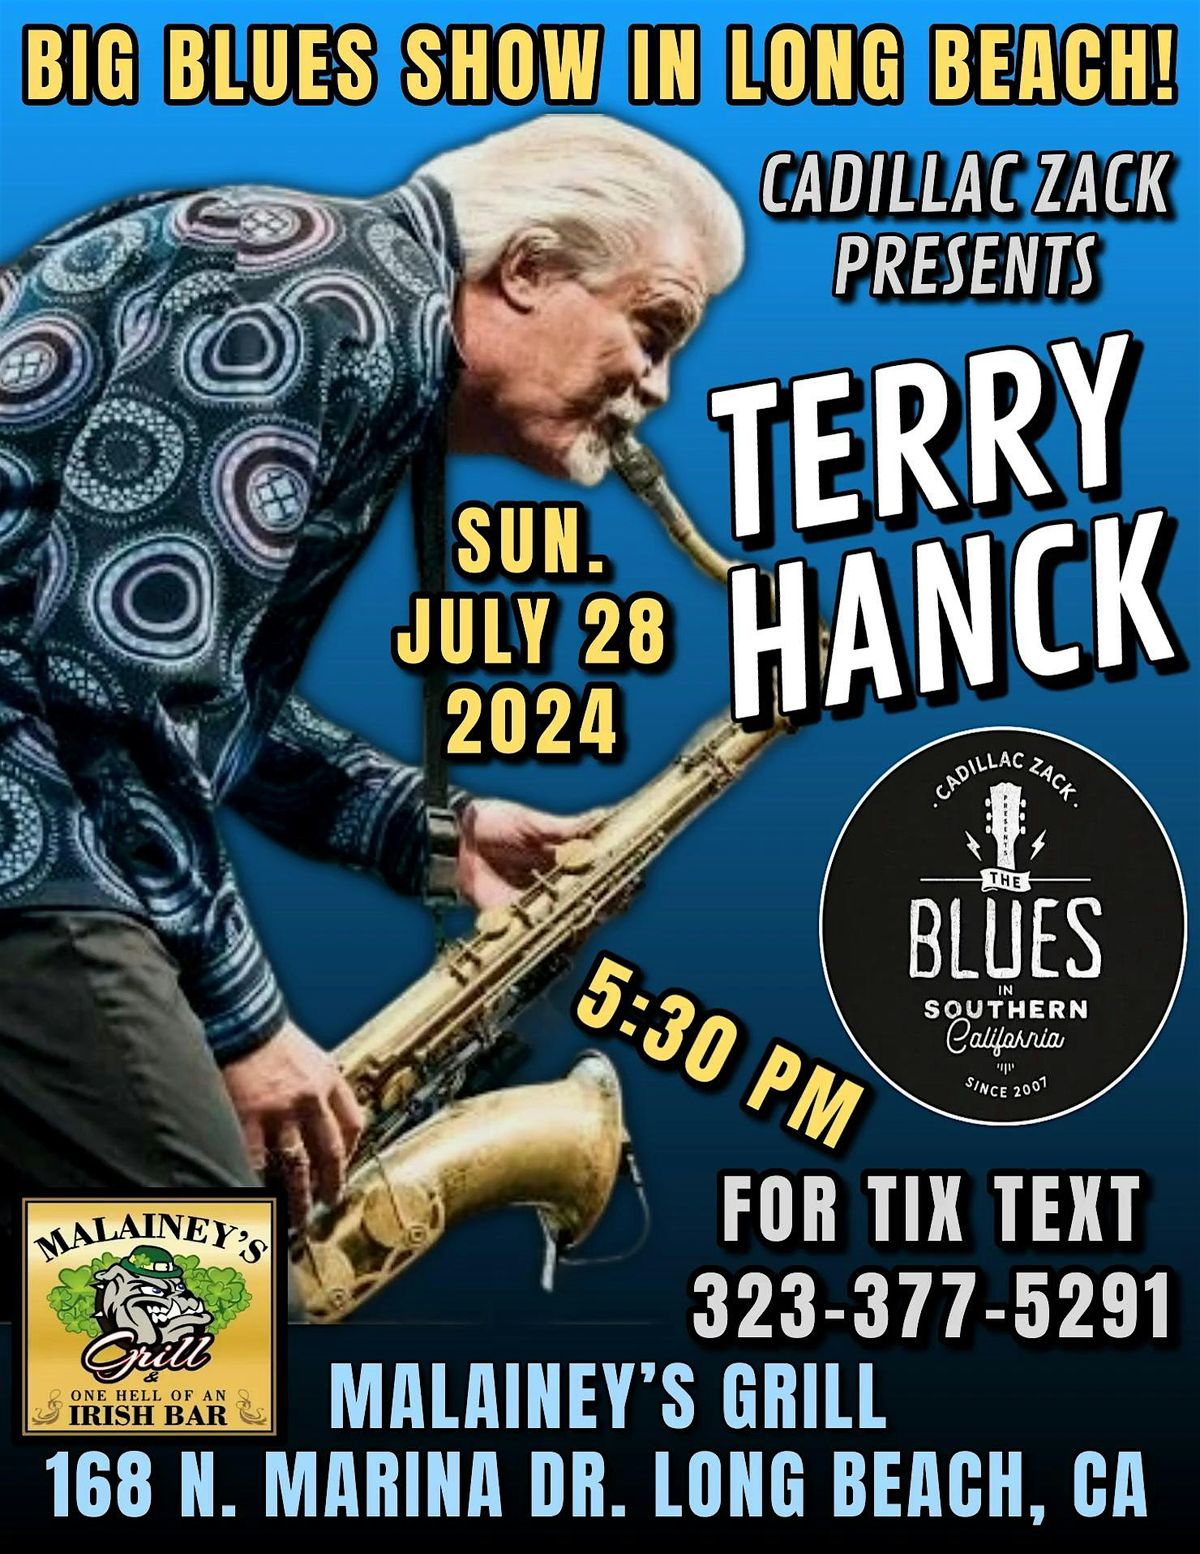 TERRY HANCK - Blues Saxophone Legend - in Long Beach!